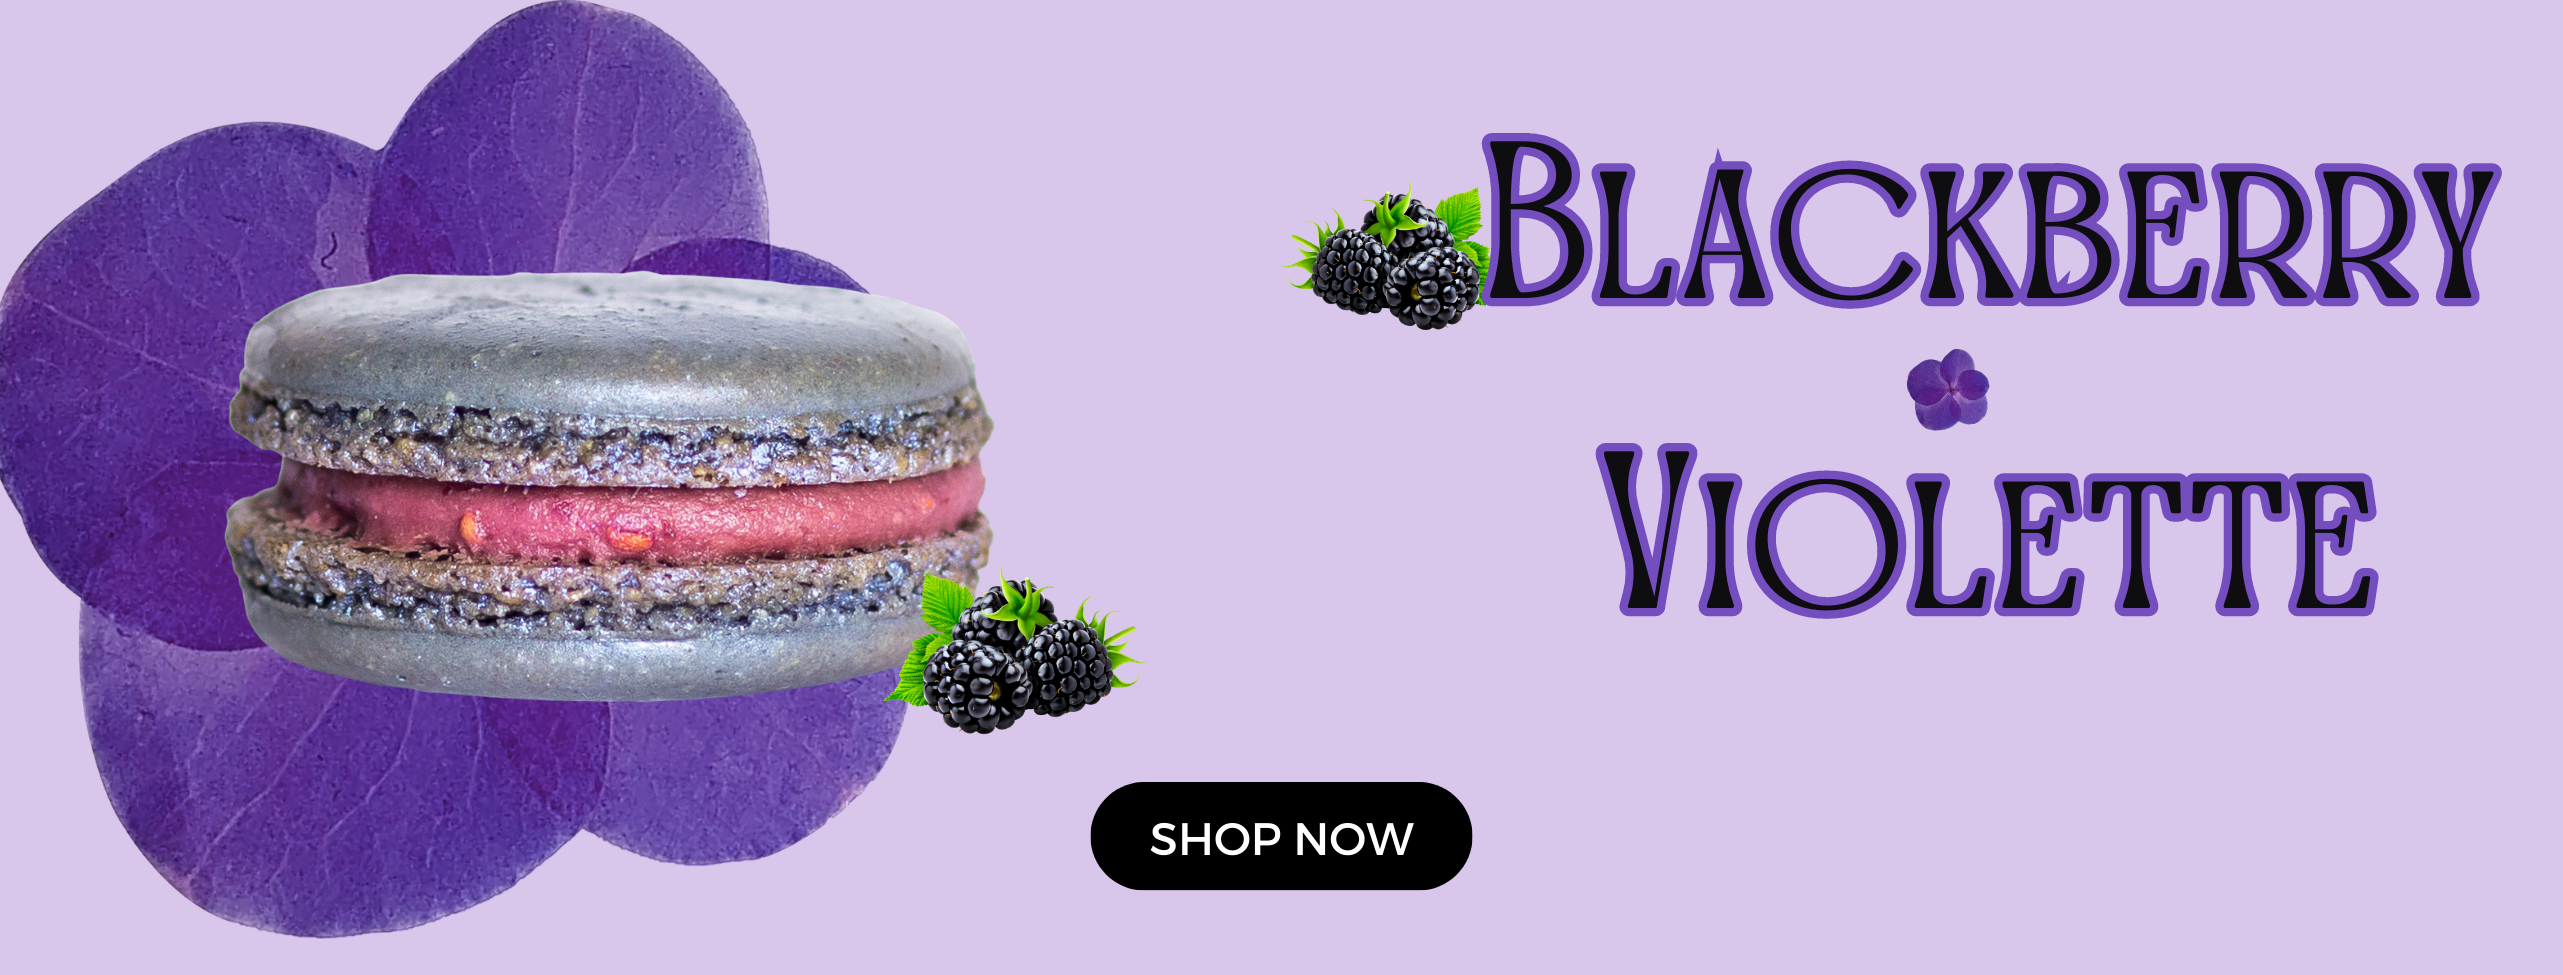 blackberry violette